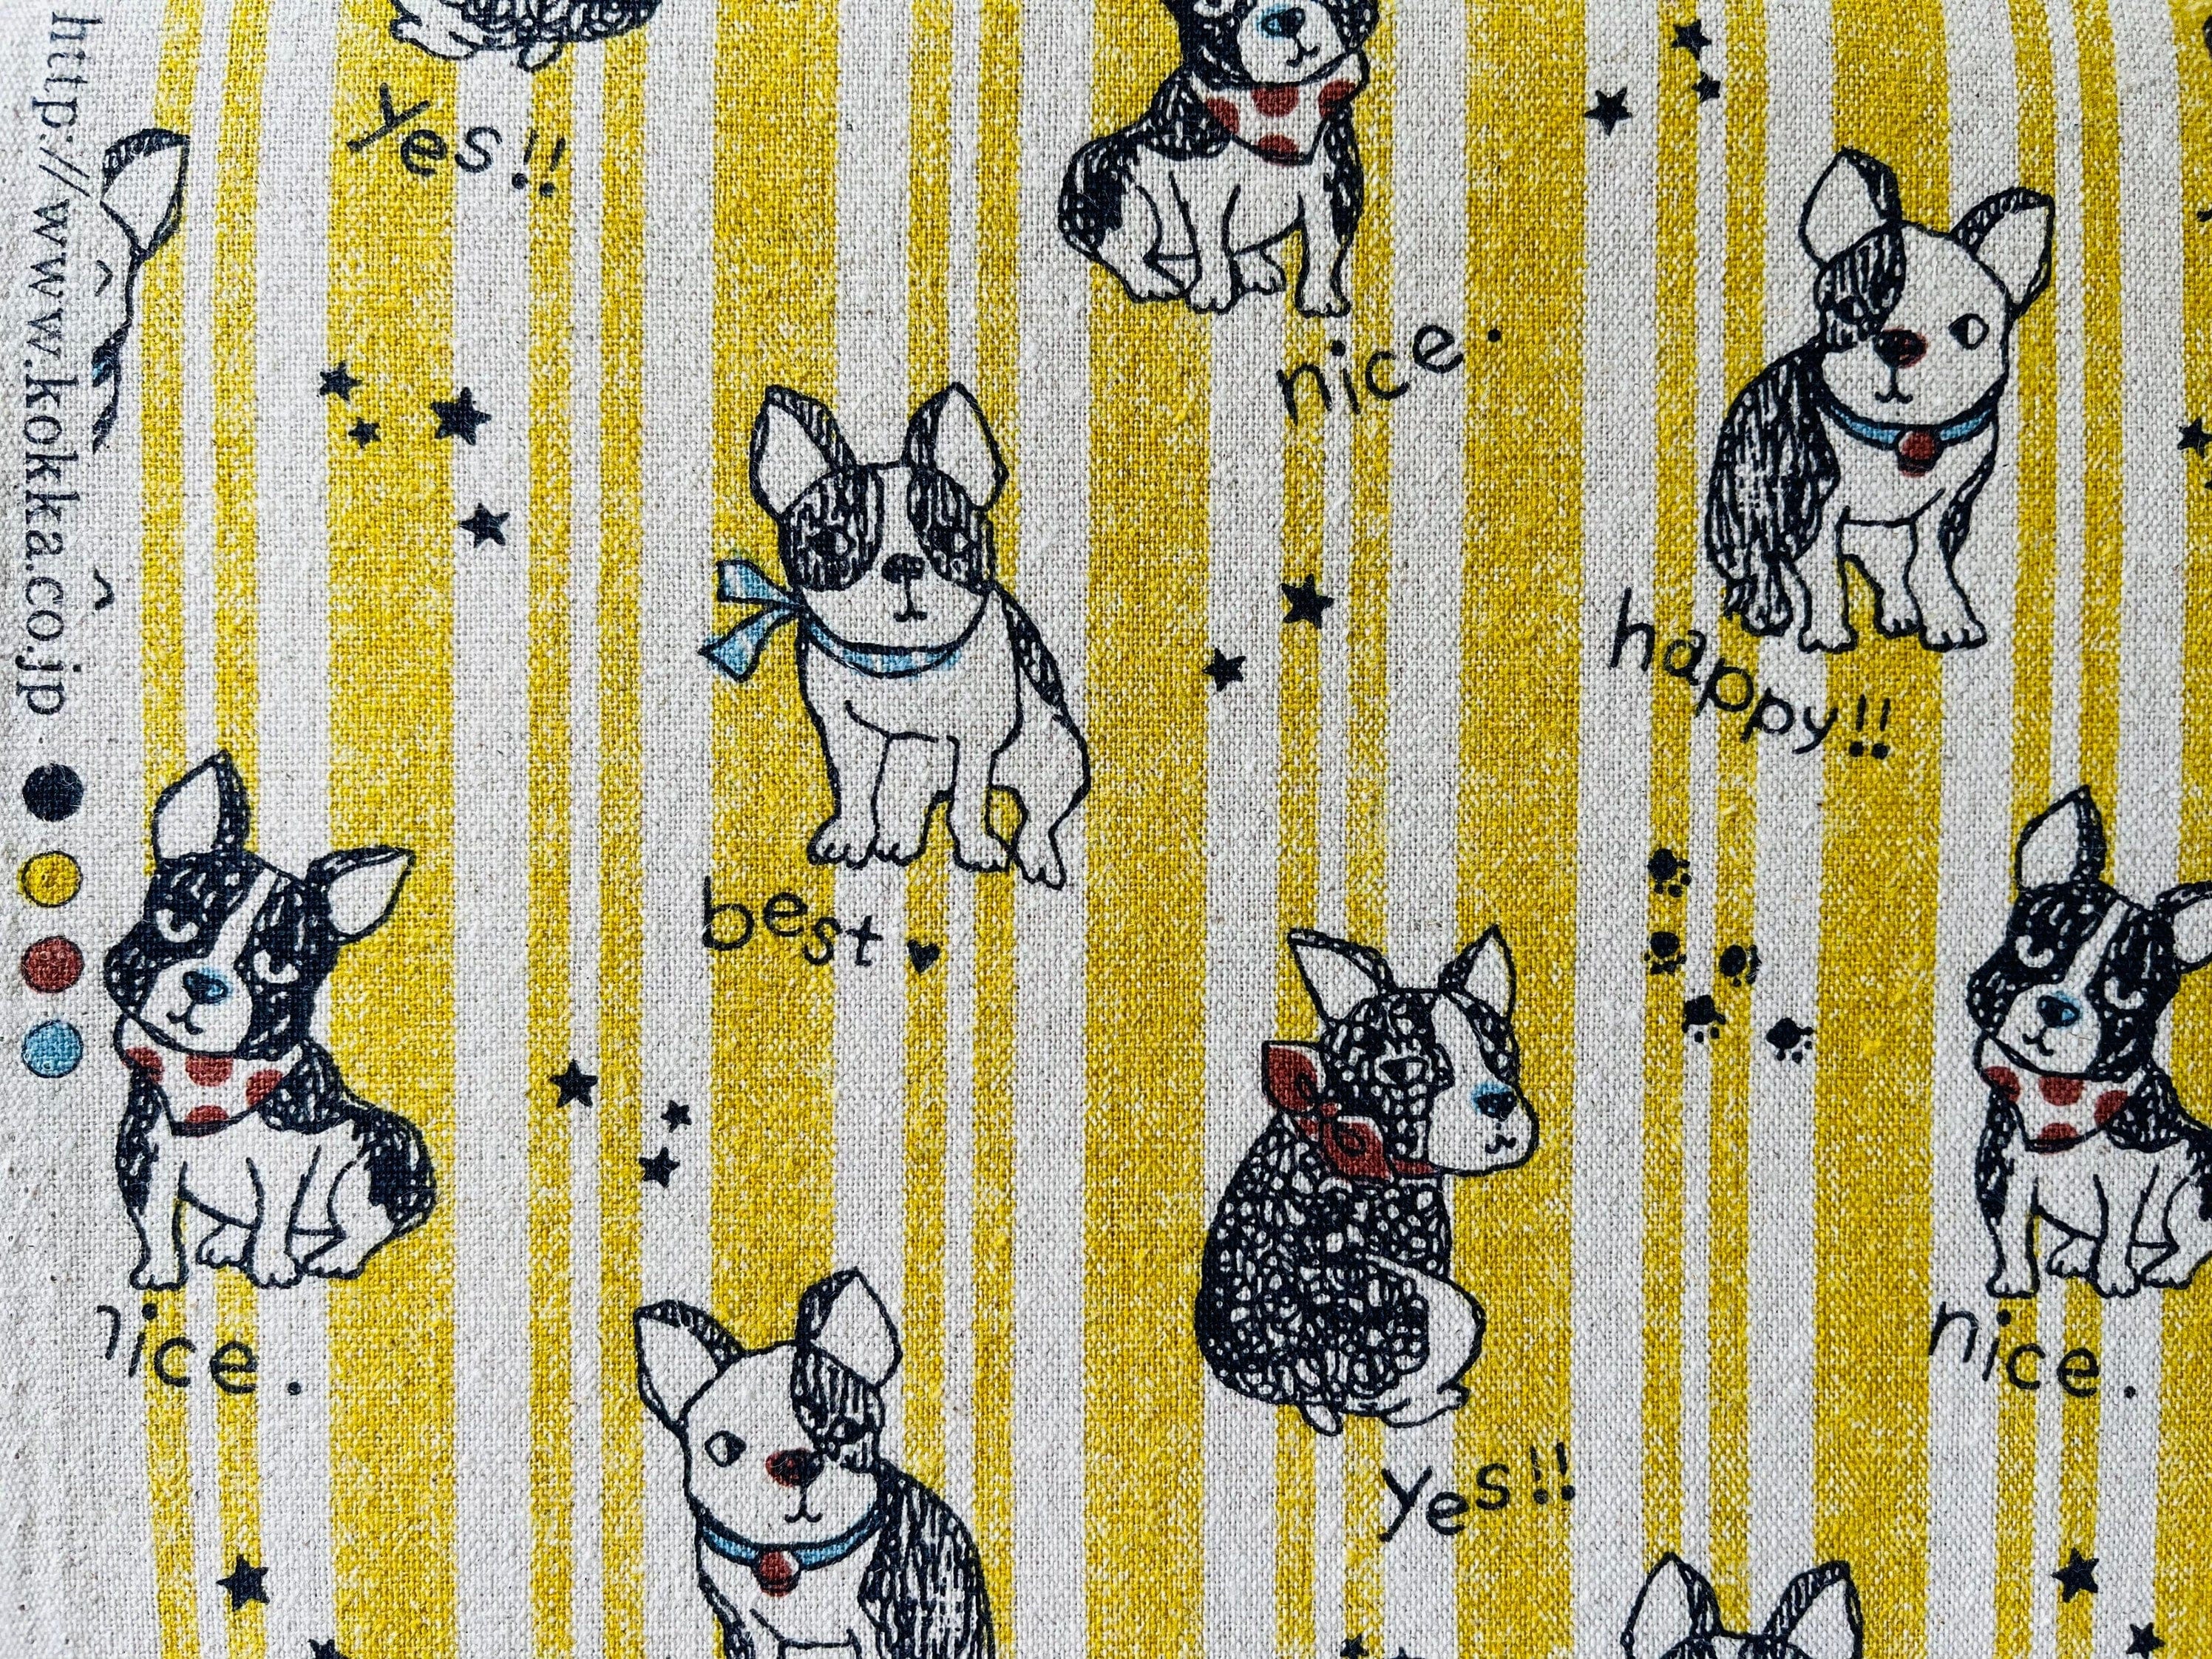 Japanese - Kokka - Dog - Bulldog Canvas - Cotton Linen Striped - Lightweight Canvas Fabric - Yellow - Black - Blue - Natural - LOA-51050